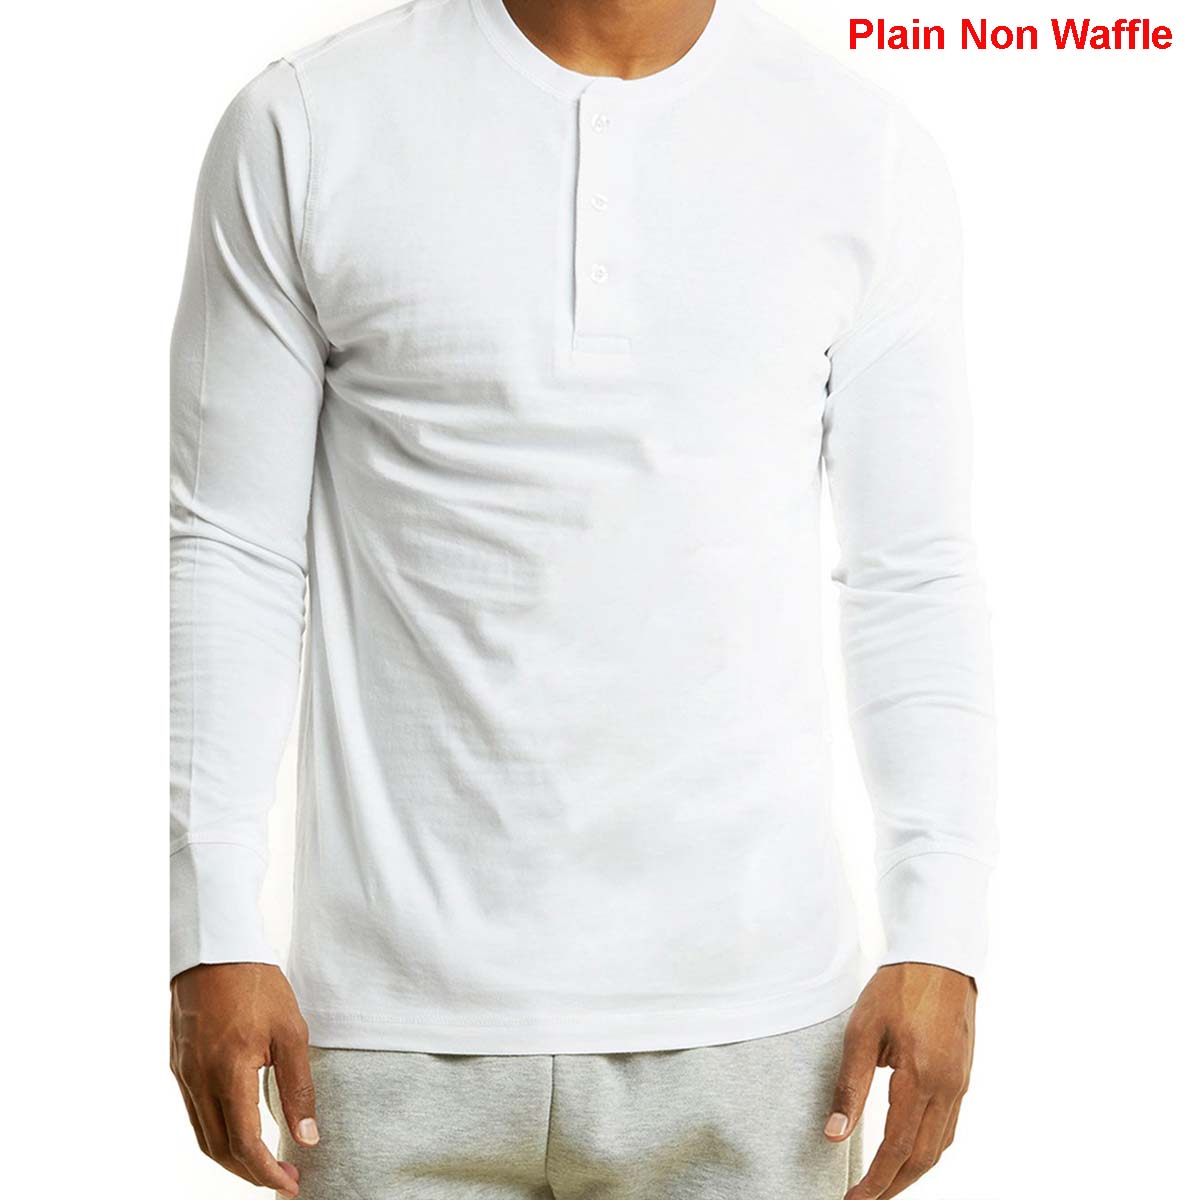 Knocker Mens 100% Cotton Thermal Top Waffle Knit Henley Undershirt Basic  Layer